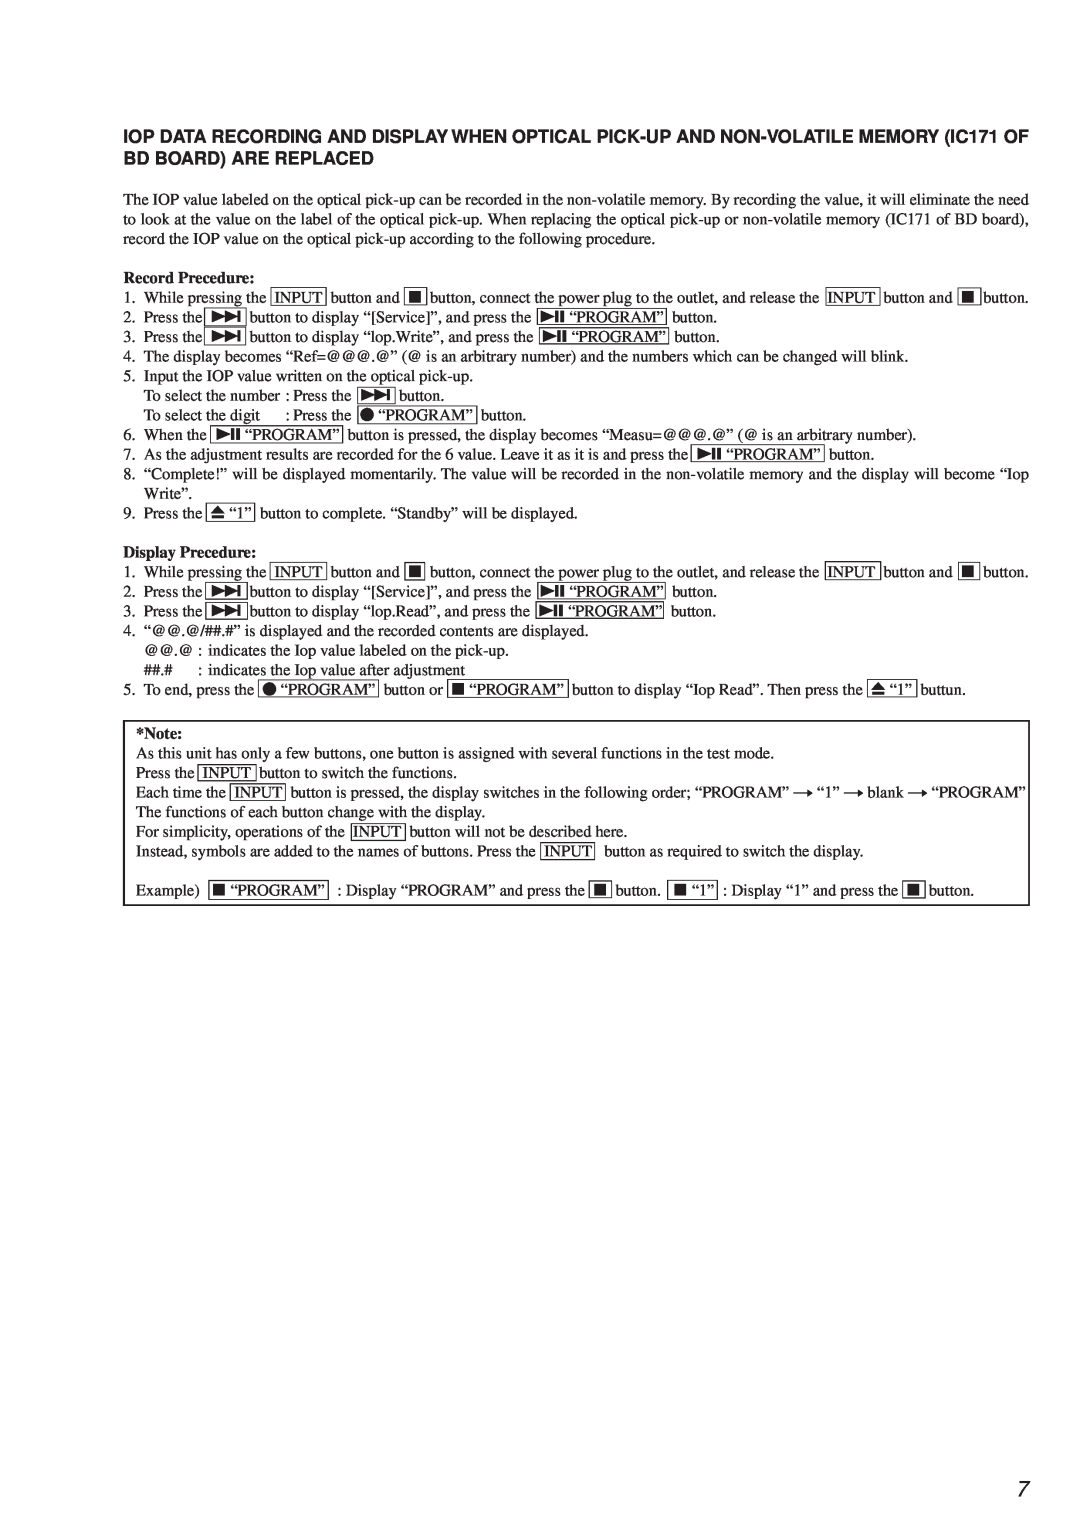 Sony MDS-PC2 service manual Record Precedure, Display Precedure 